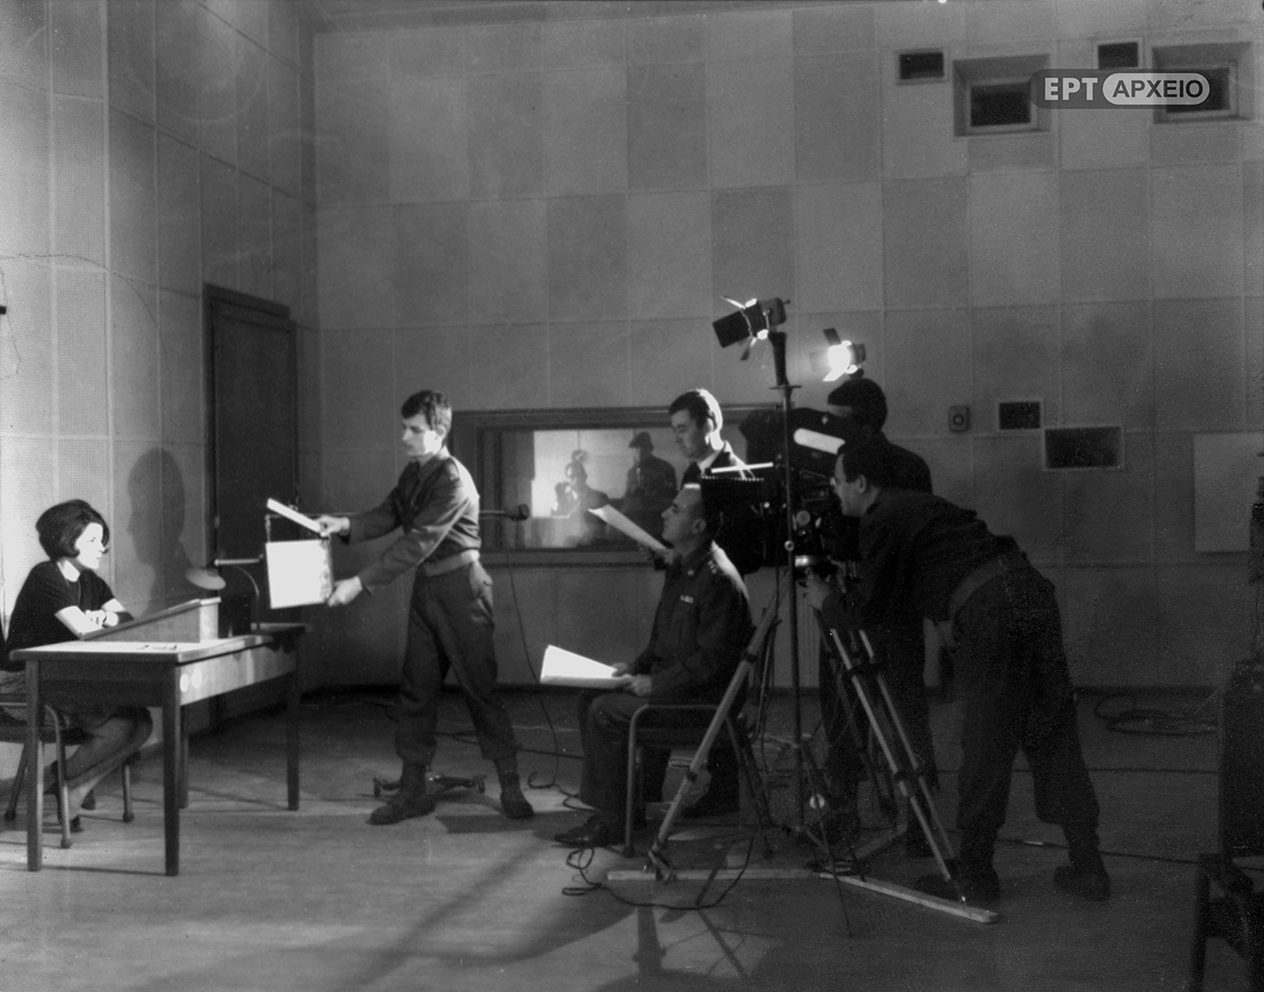 «To Αρχείο της ΕΡΤ» παρουσιάζει την πρώτη ημέρα της τηλεόρασης στην Ελλάδα, τον Φεβρουάριο του 1966